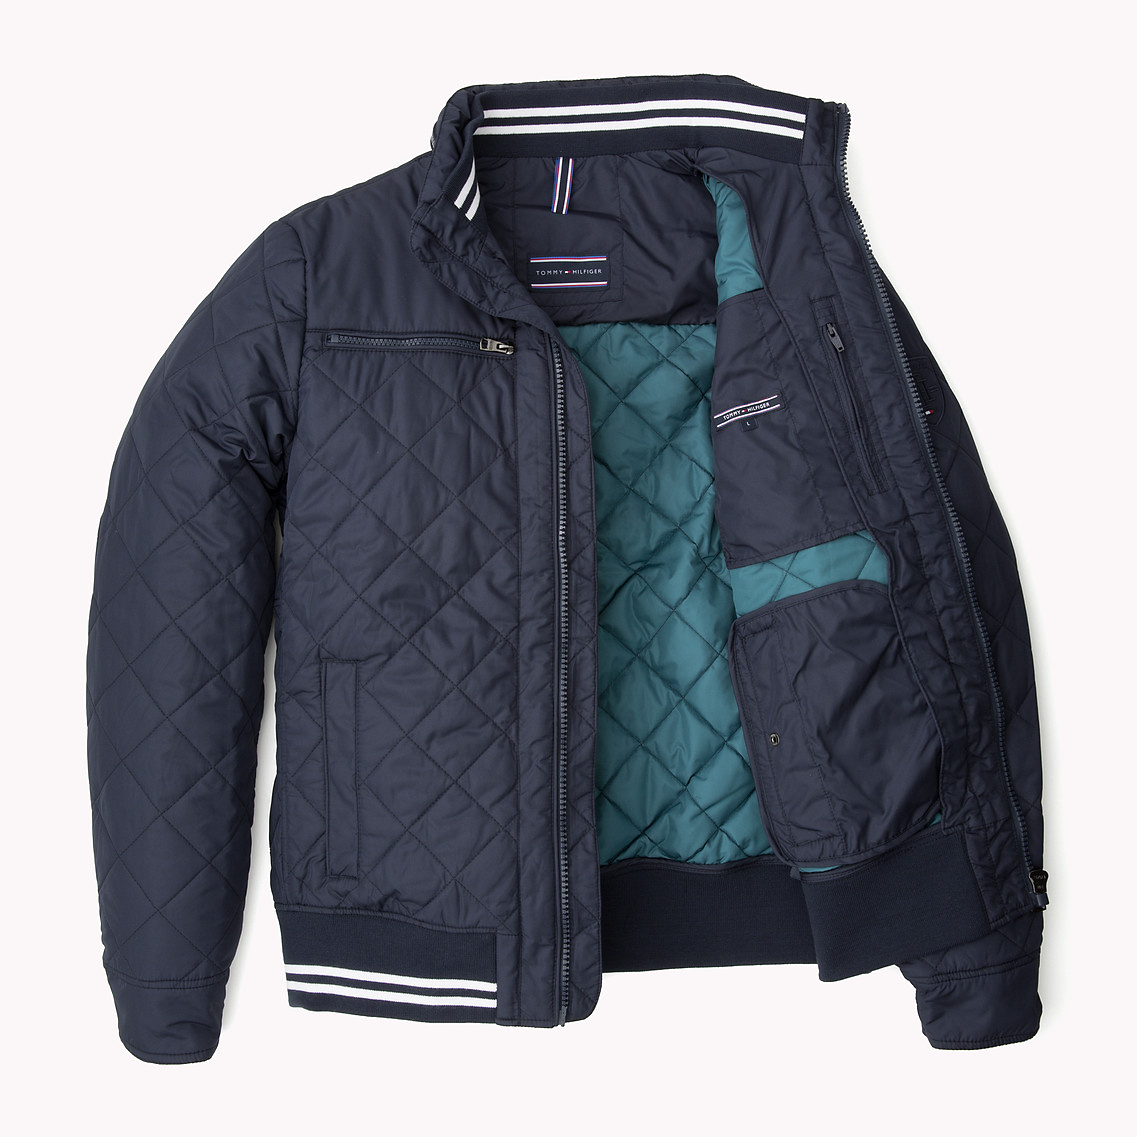 bobby jacket hilfiger Shop Clothing Online